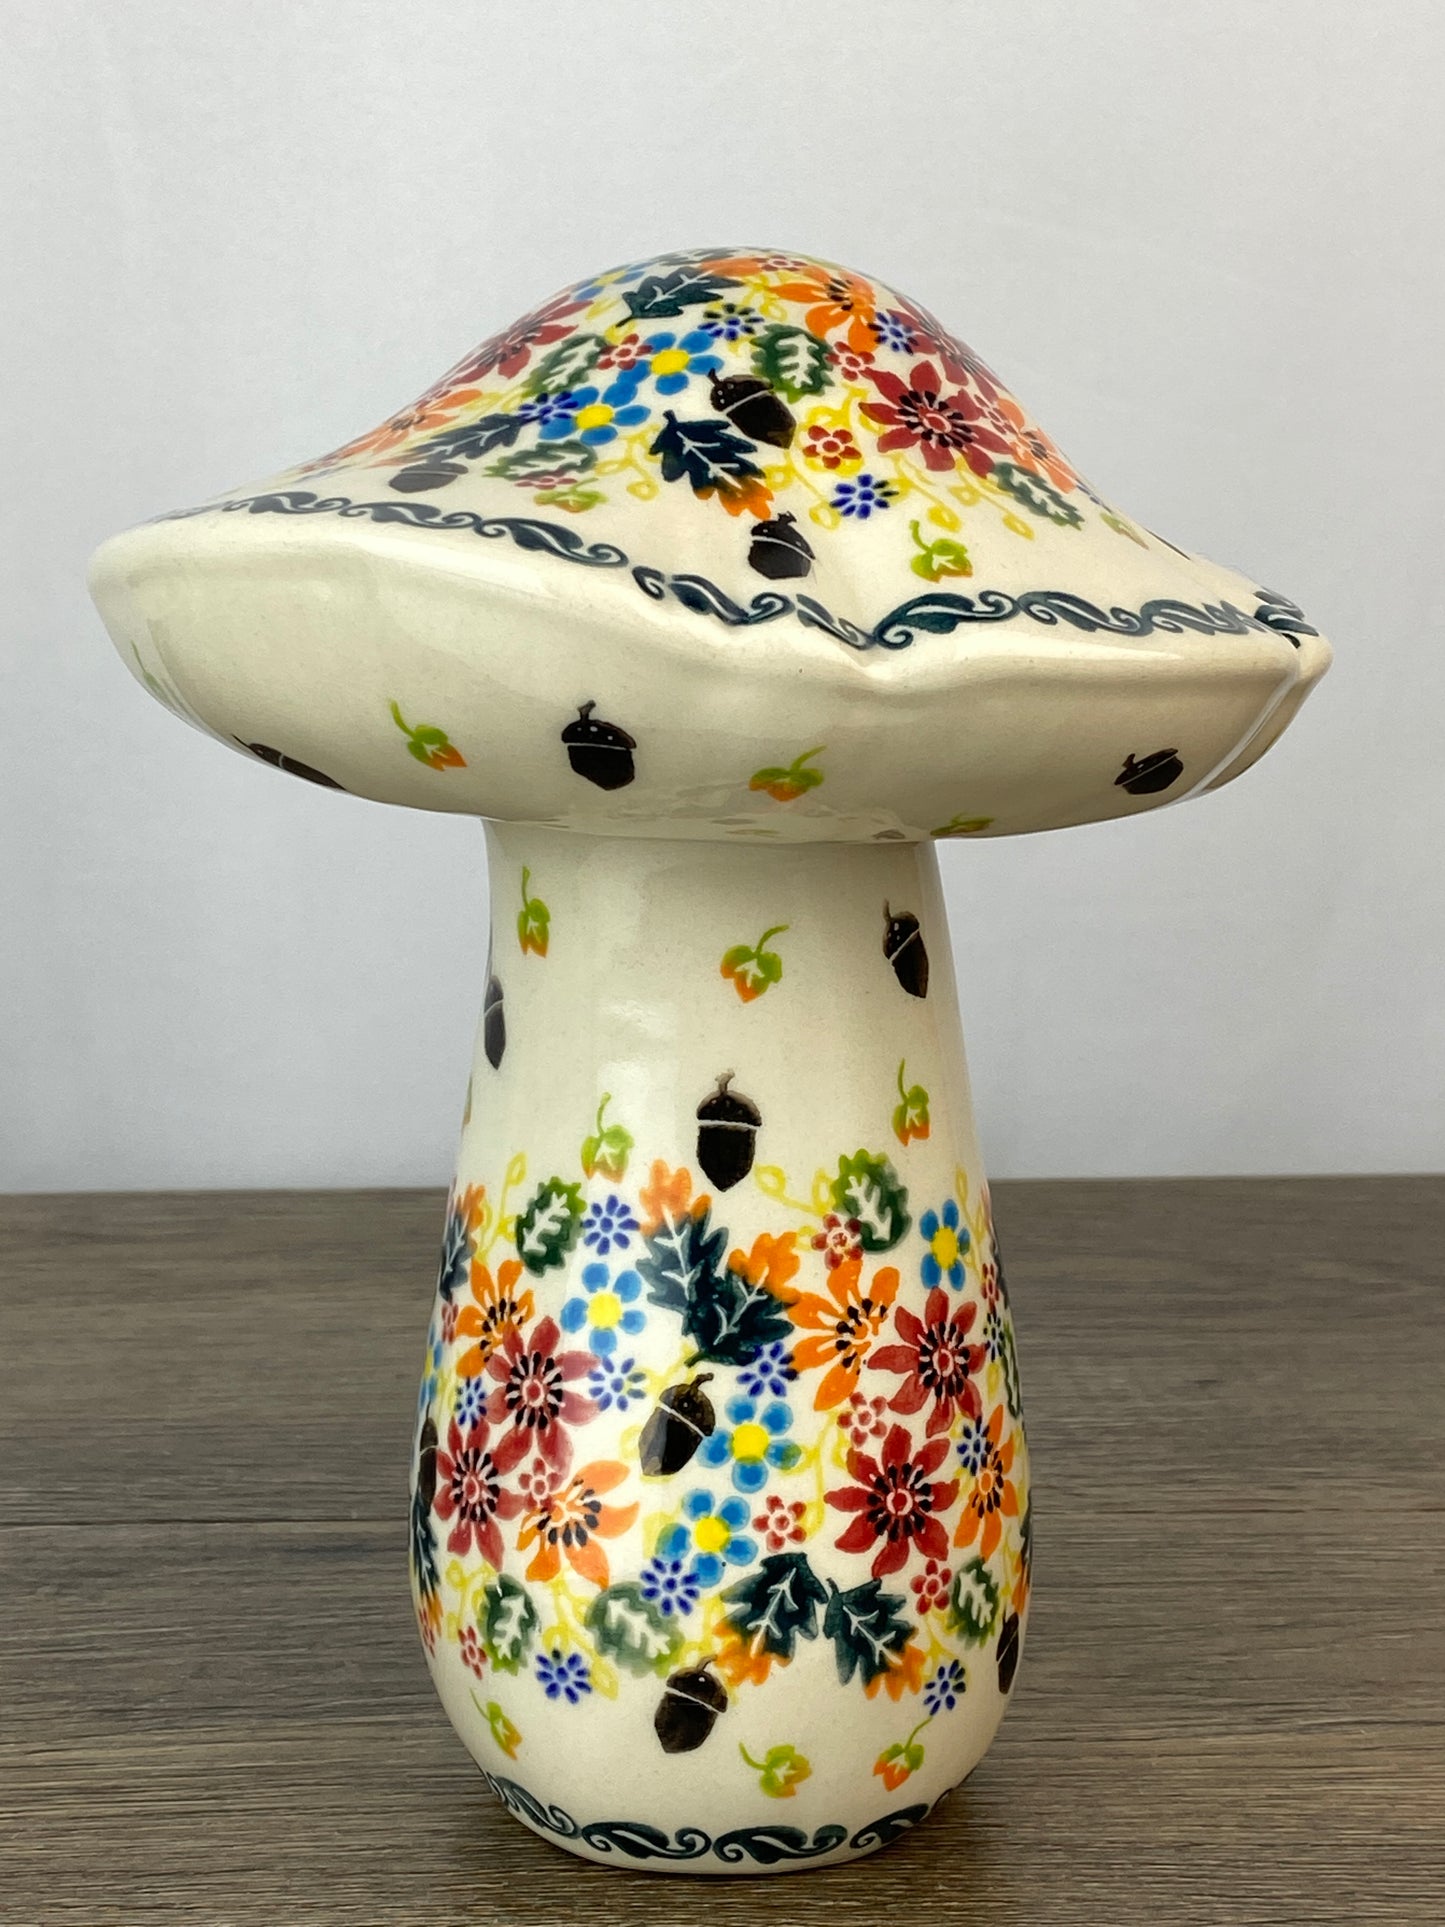 XL Mushroom Figurine - Pattern U633